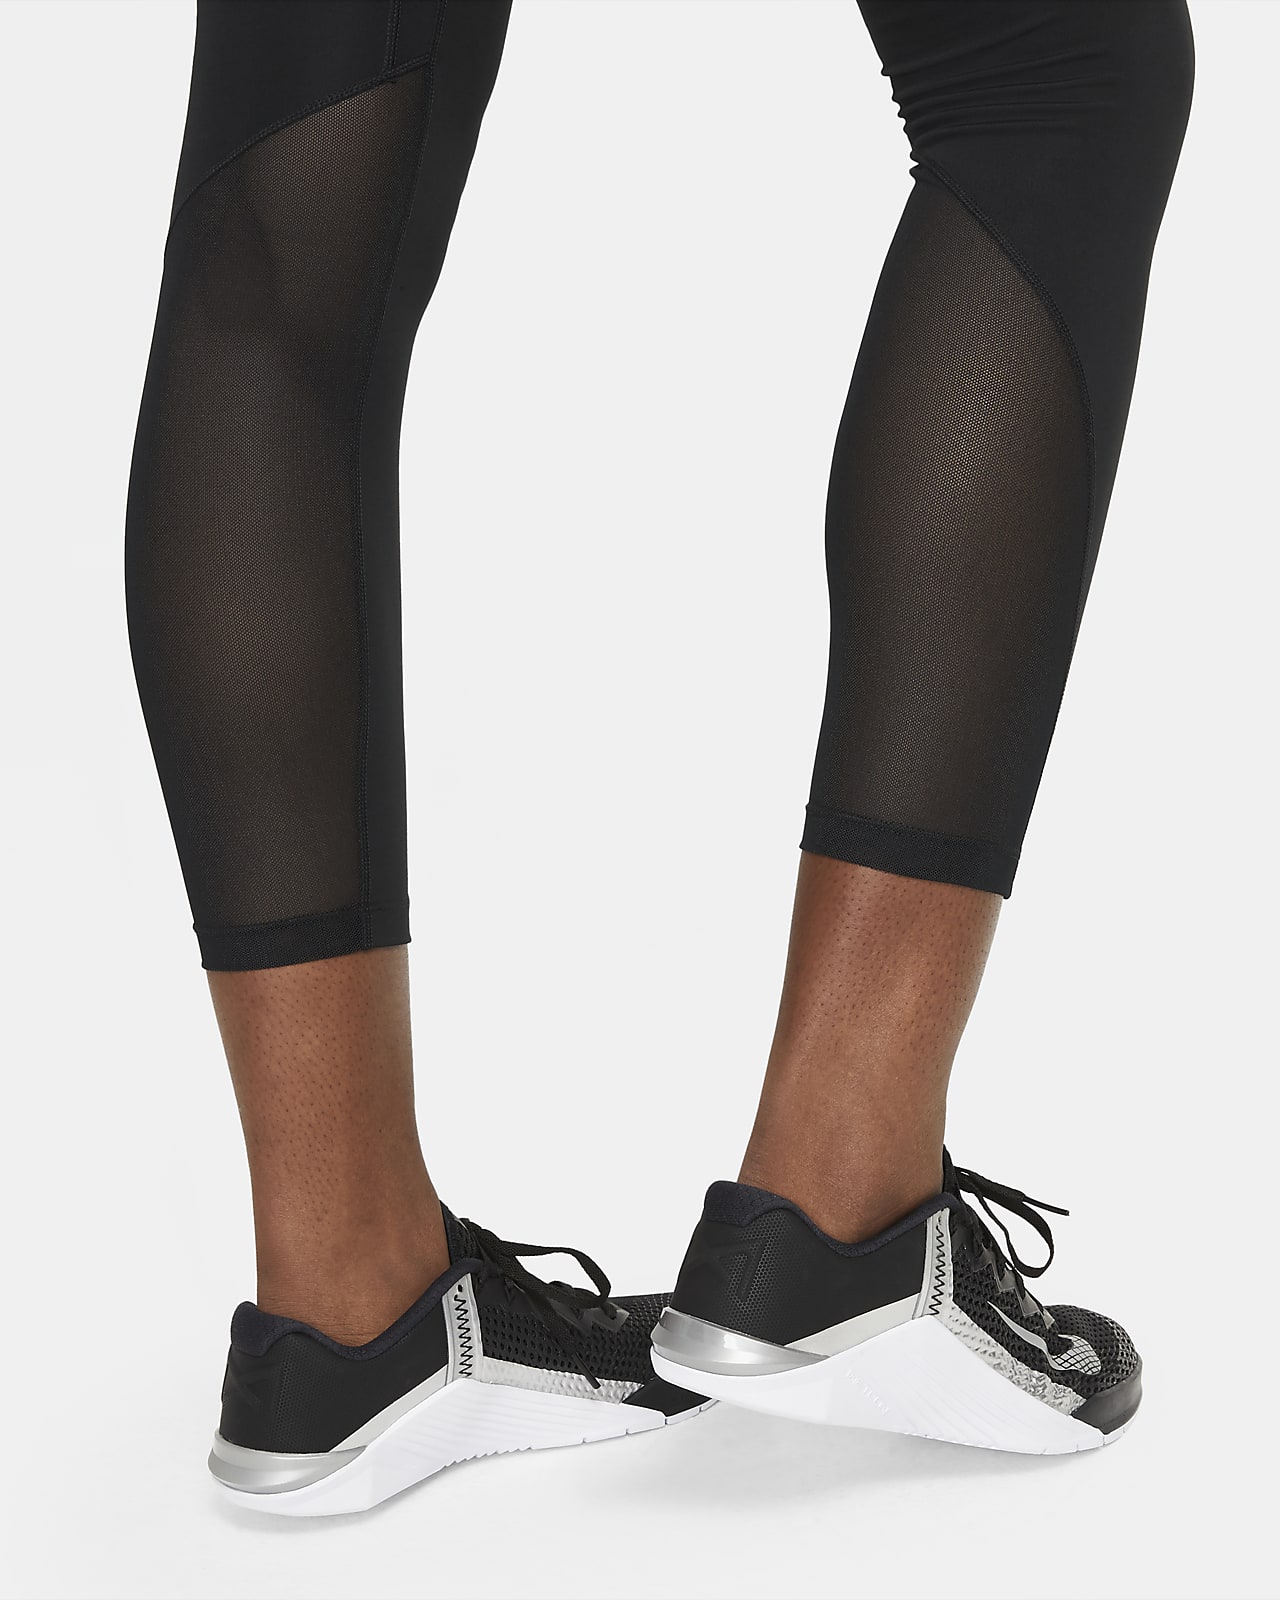 Nike One Metallic Desert Berry Leggings - Women's XS, DQ6308-667